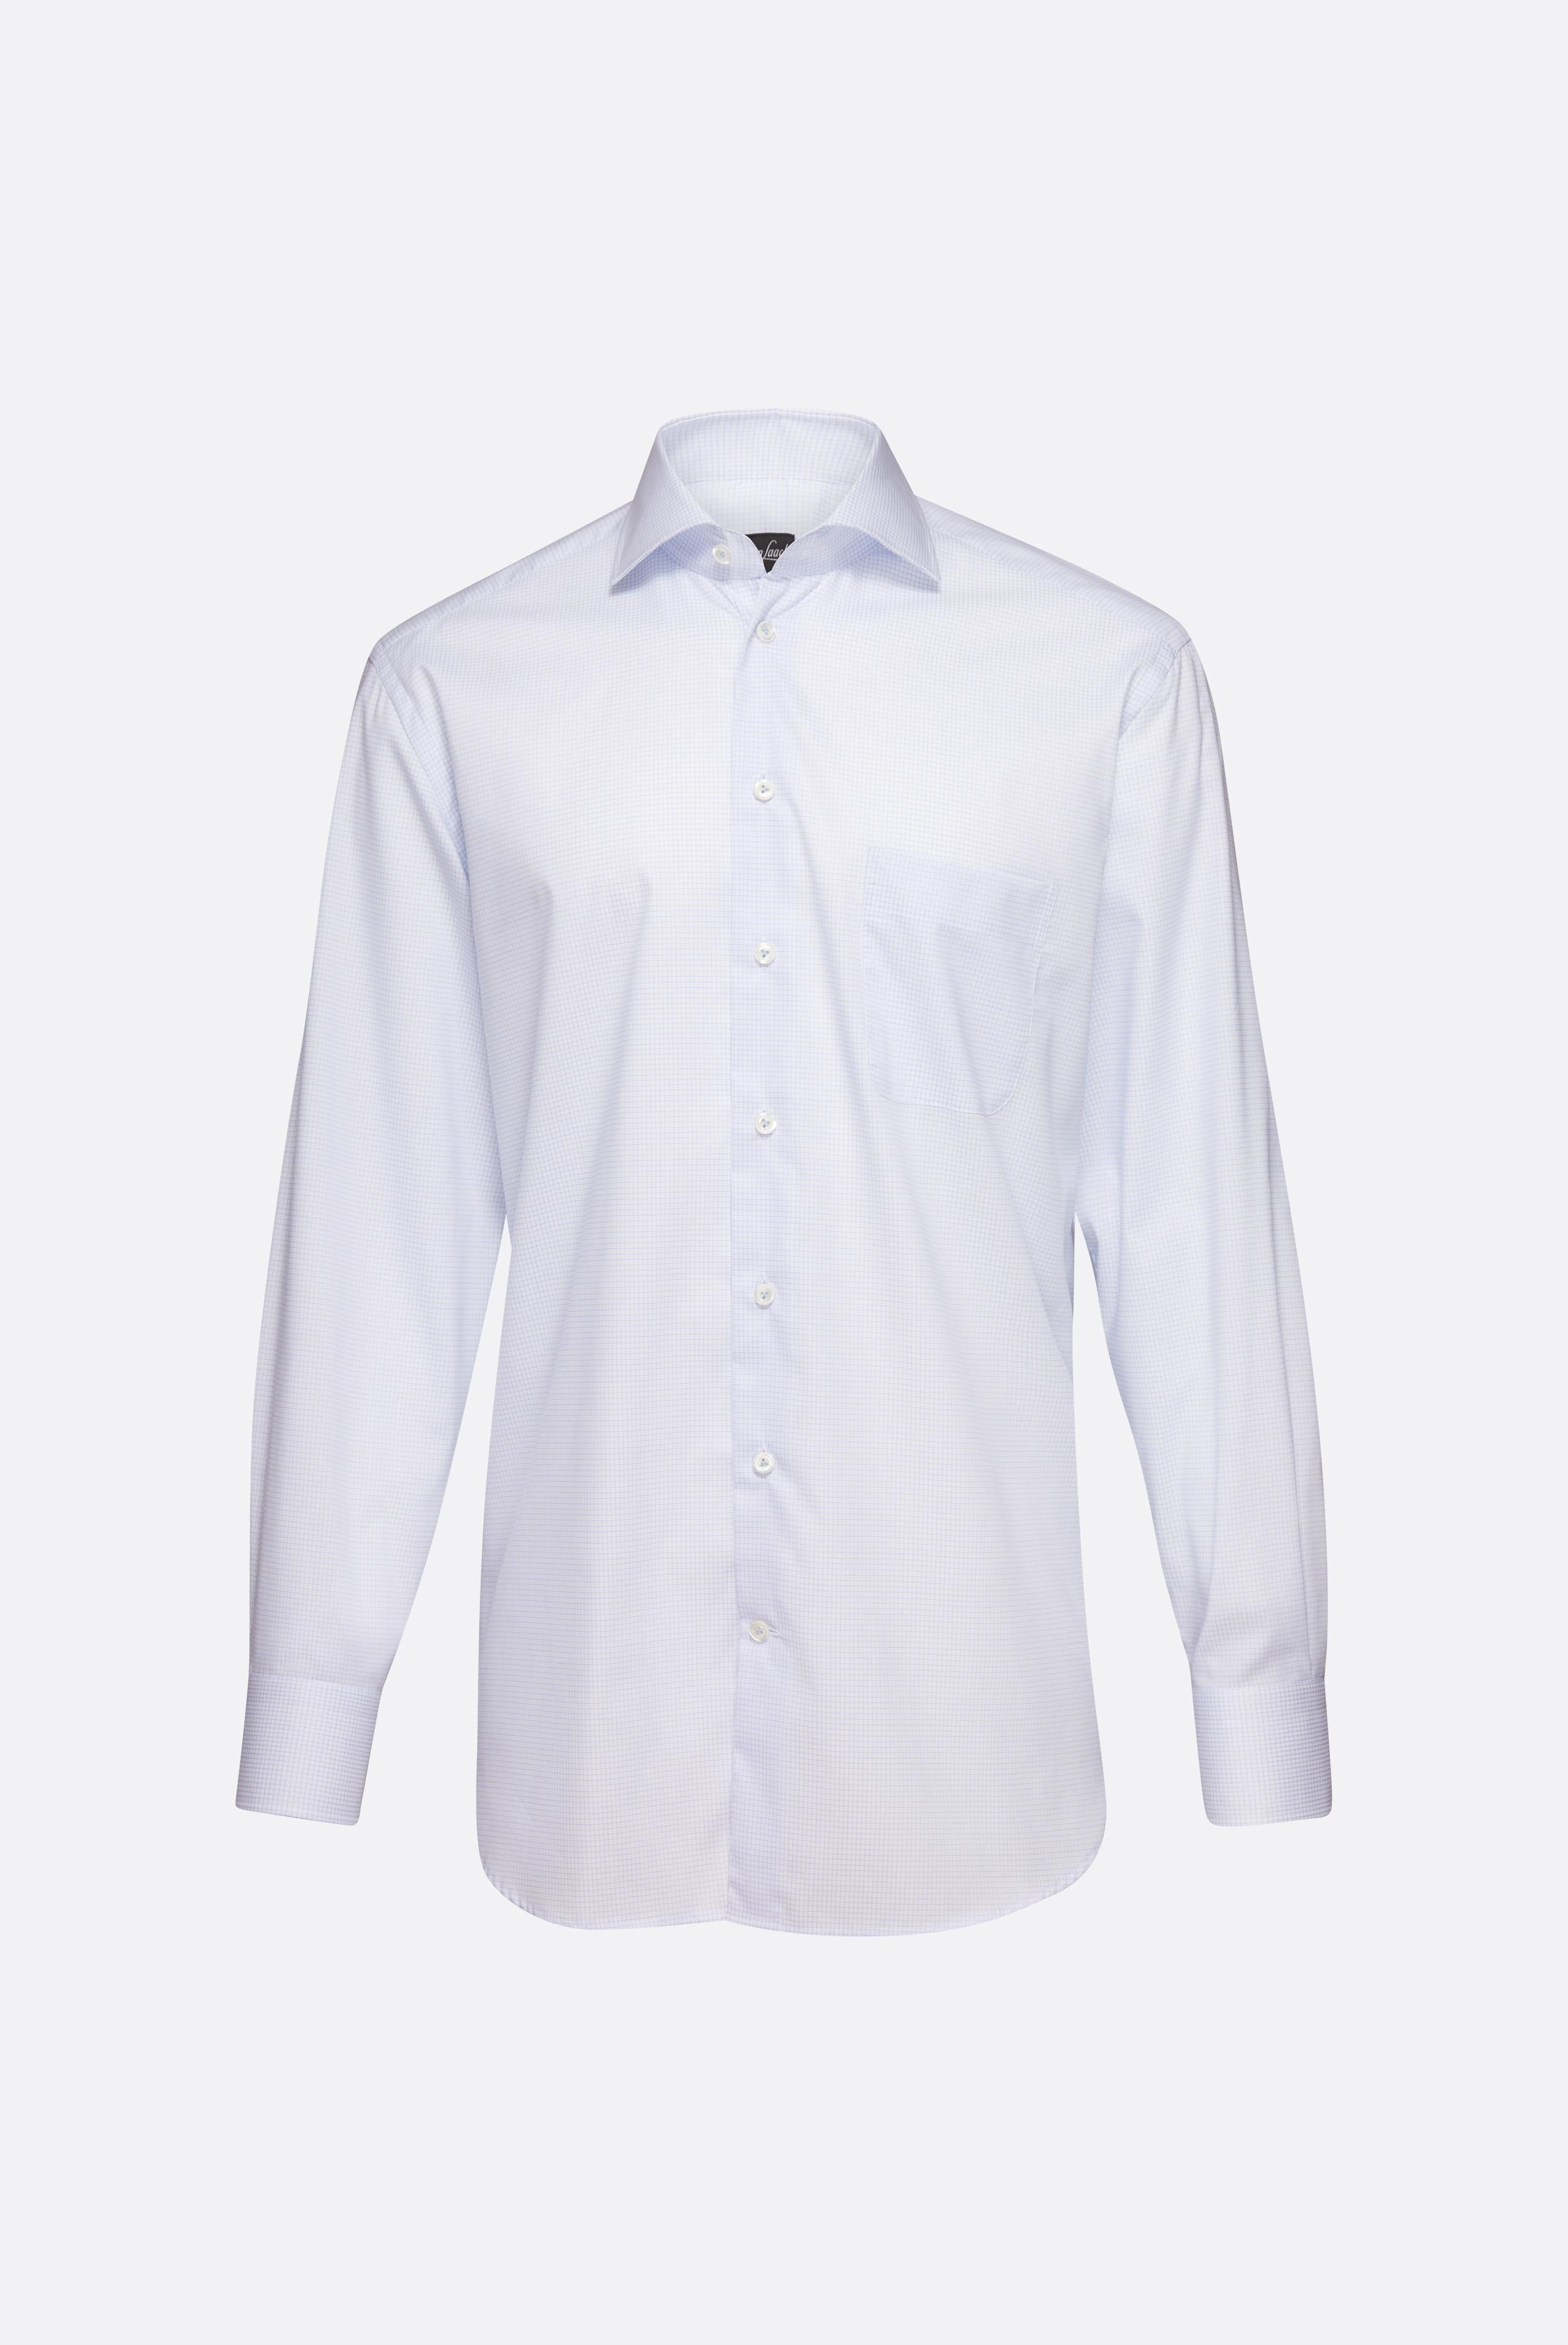 Easy Iron Shirts+Wrinkel free checked shirt comfort fit+20.2021.BQ.151782.720.42